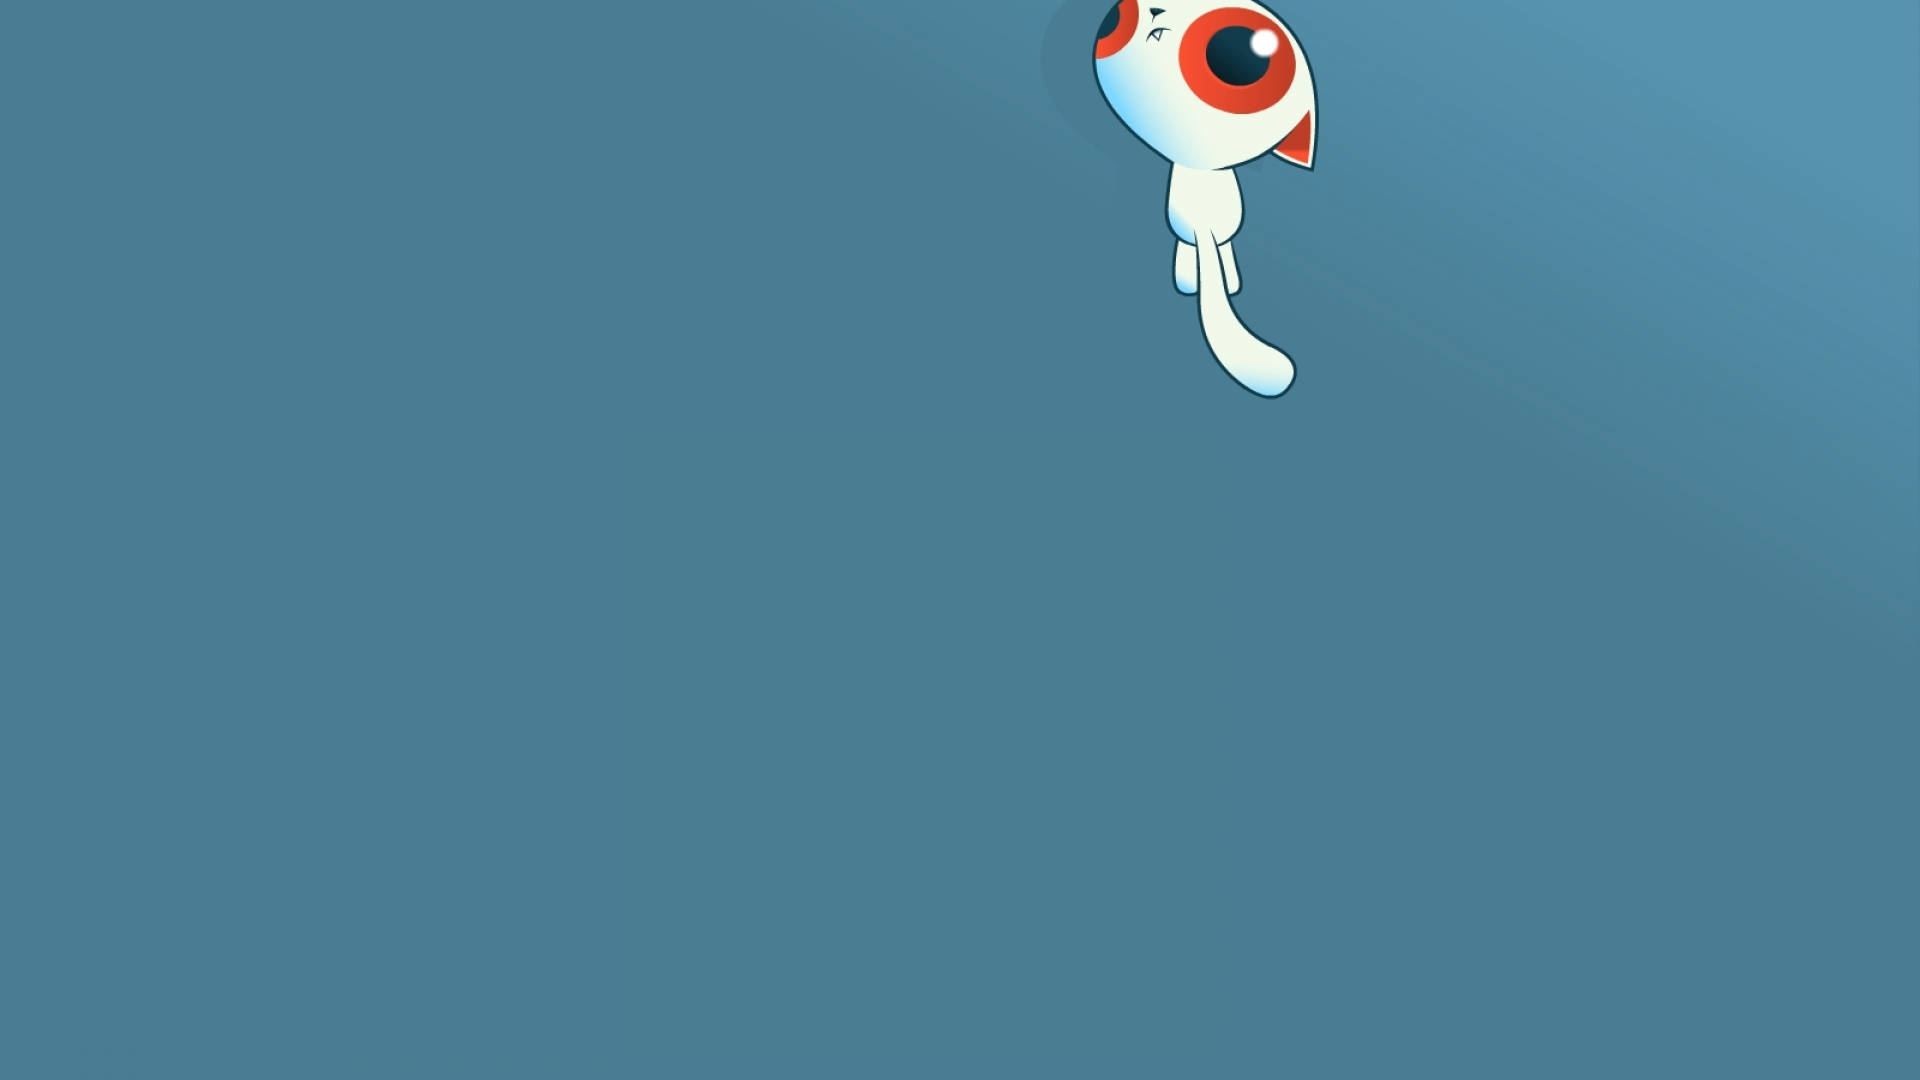 Red-eyed Cartoon Cat Background